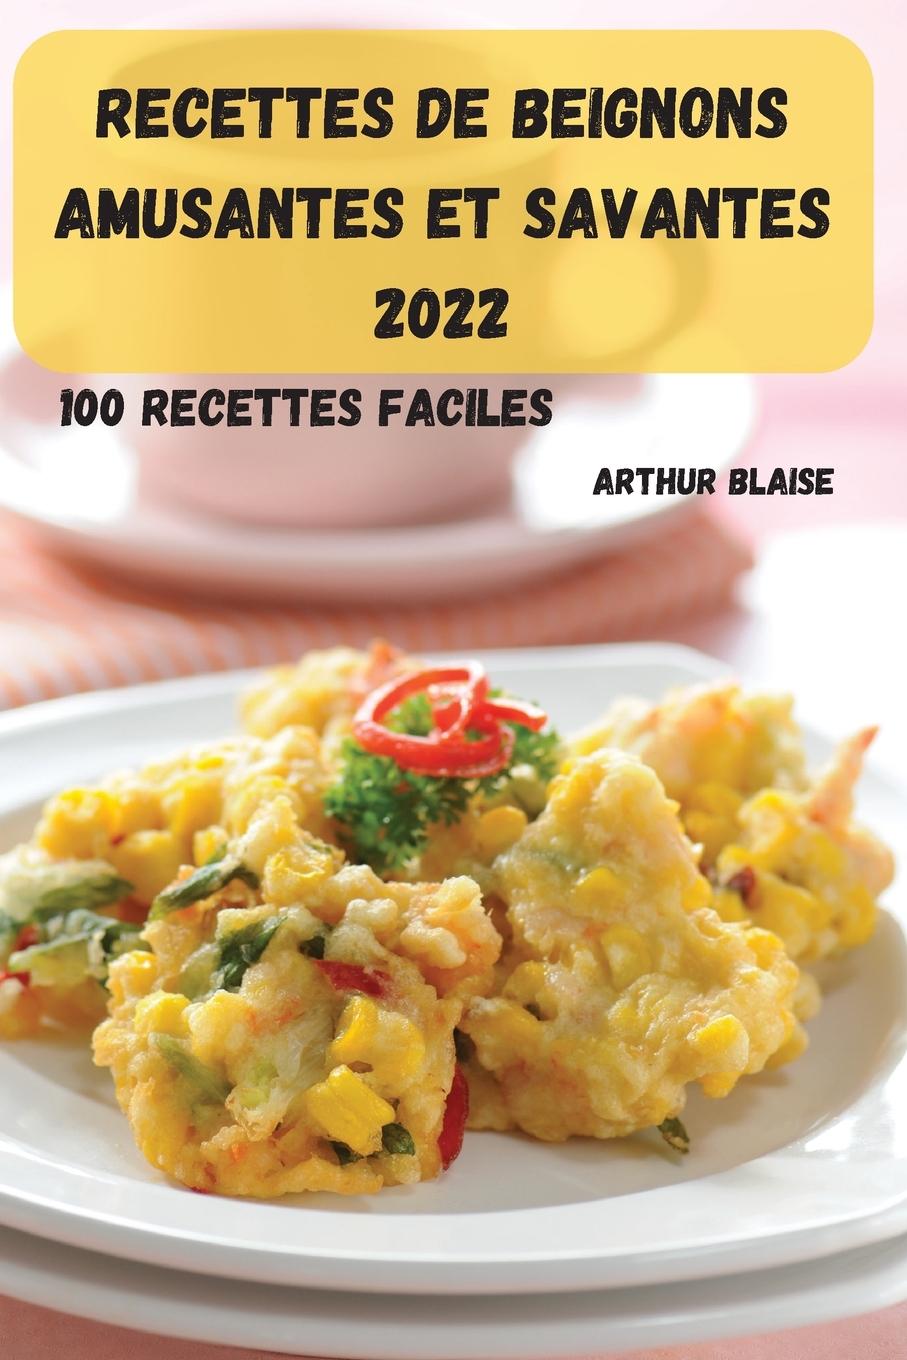 Knjiga Recettes de Beignons Amusantes Et Savantes 2022 